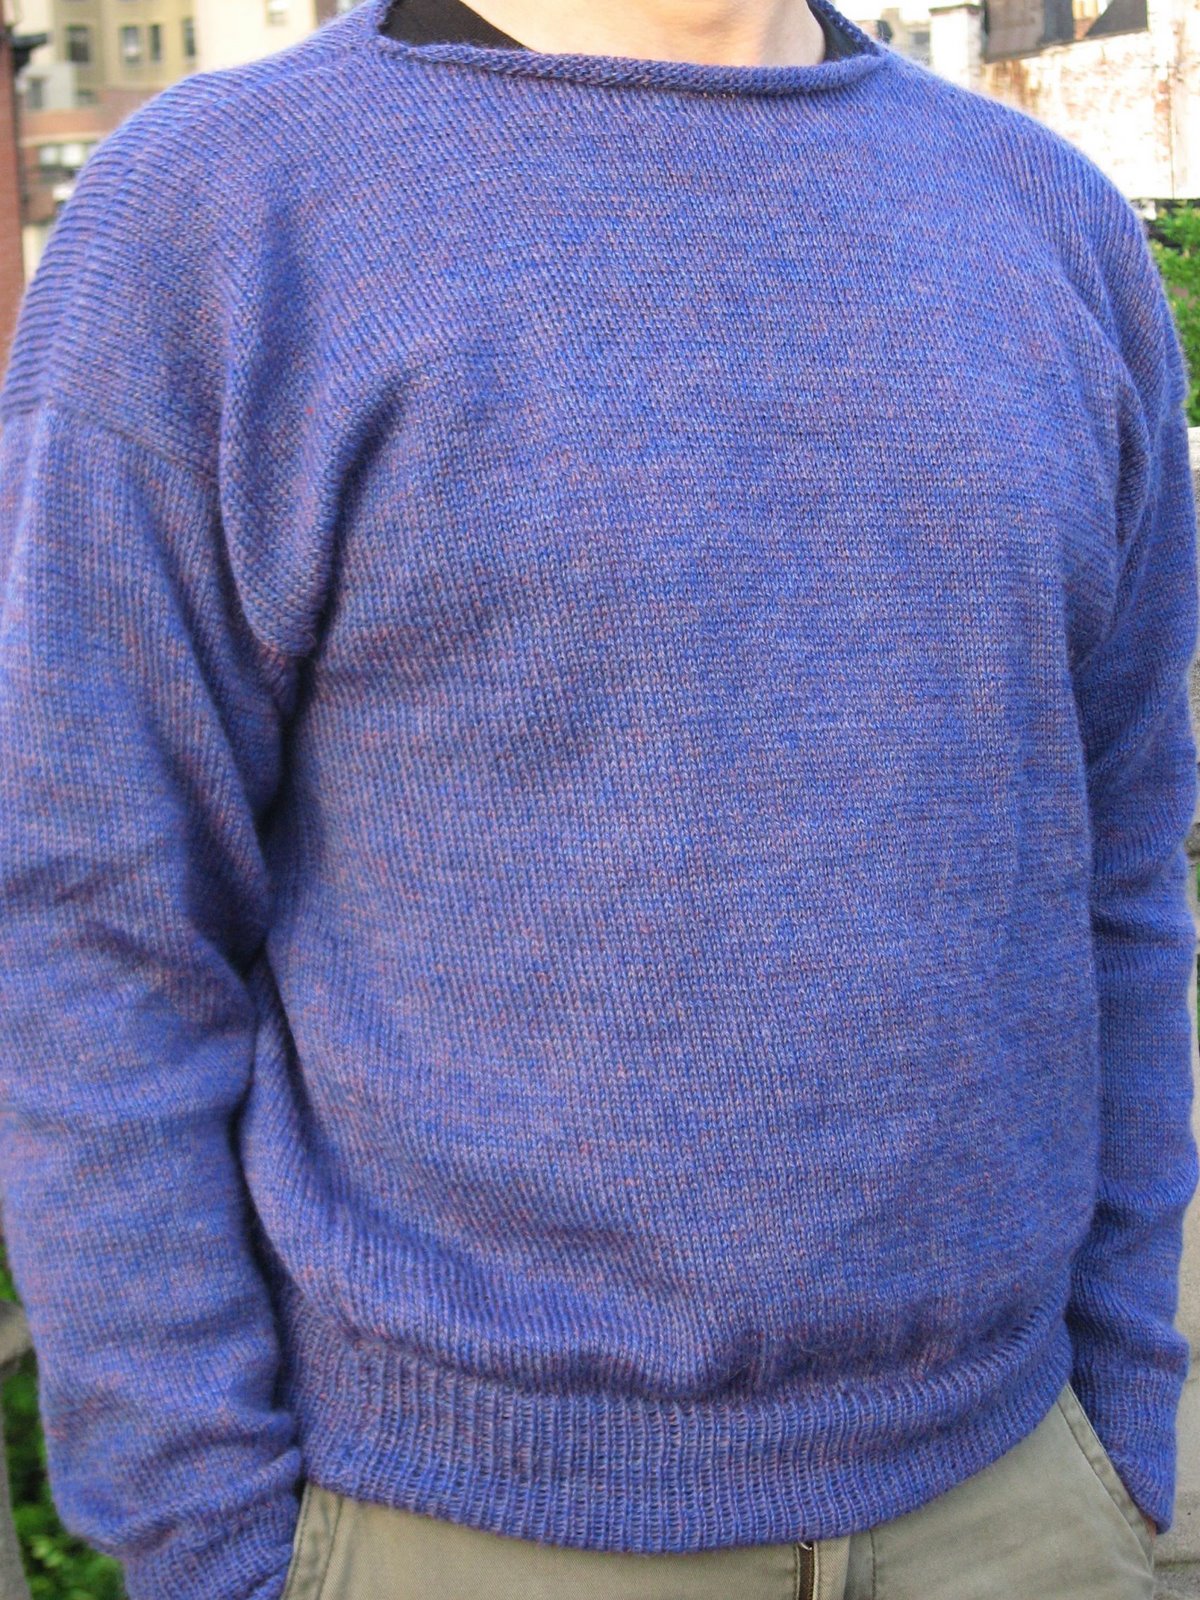 [David+in+sweater+2.JPG]